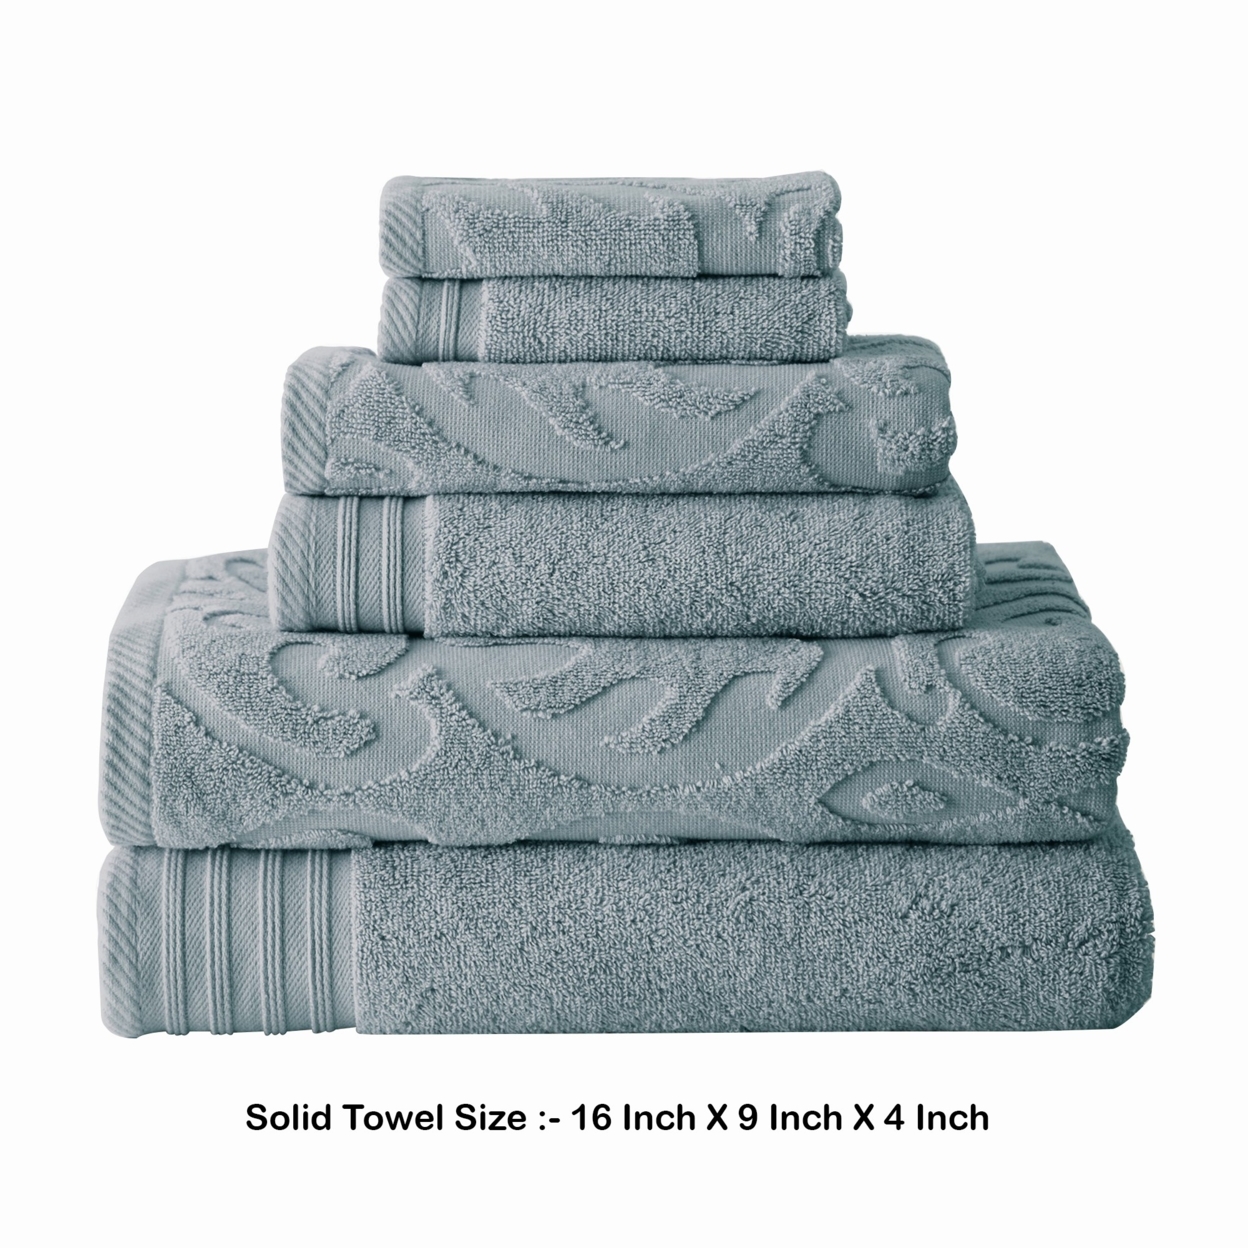 Saltoro Sherpi Oya 6 Piece Soft Egyptian Cotton Towel Set, Medallion Pattern, Blue Gray- Saltoro Sherpi